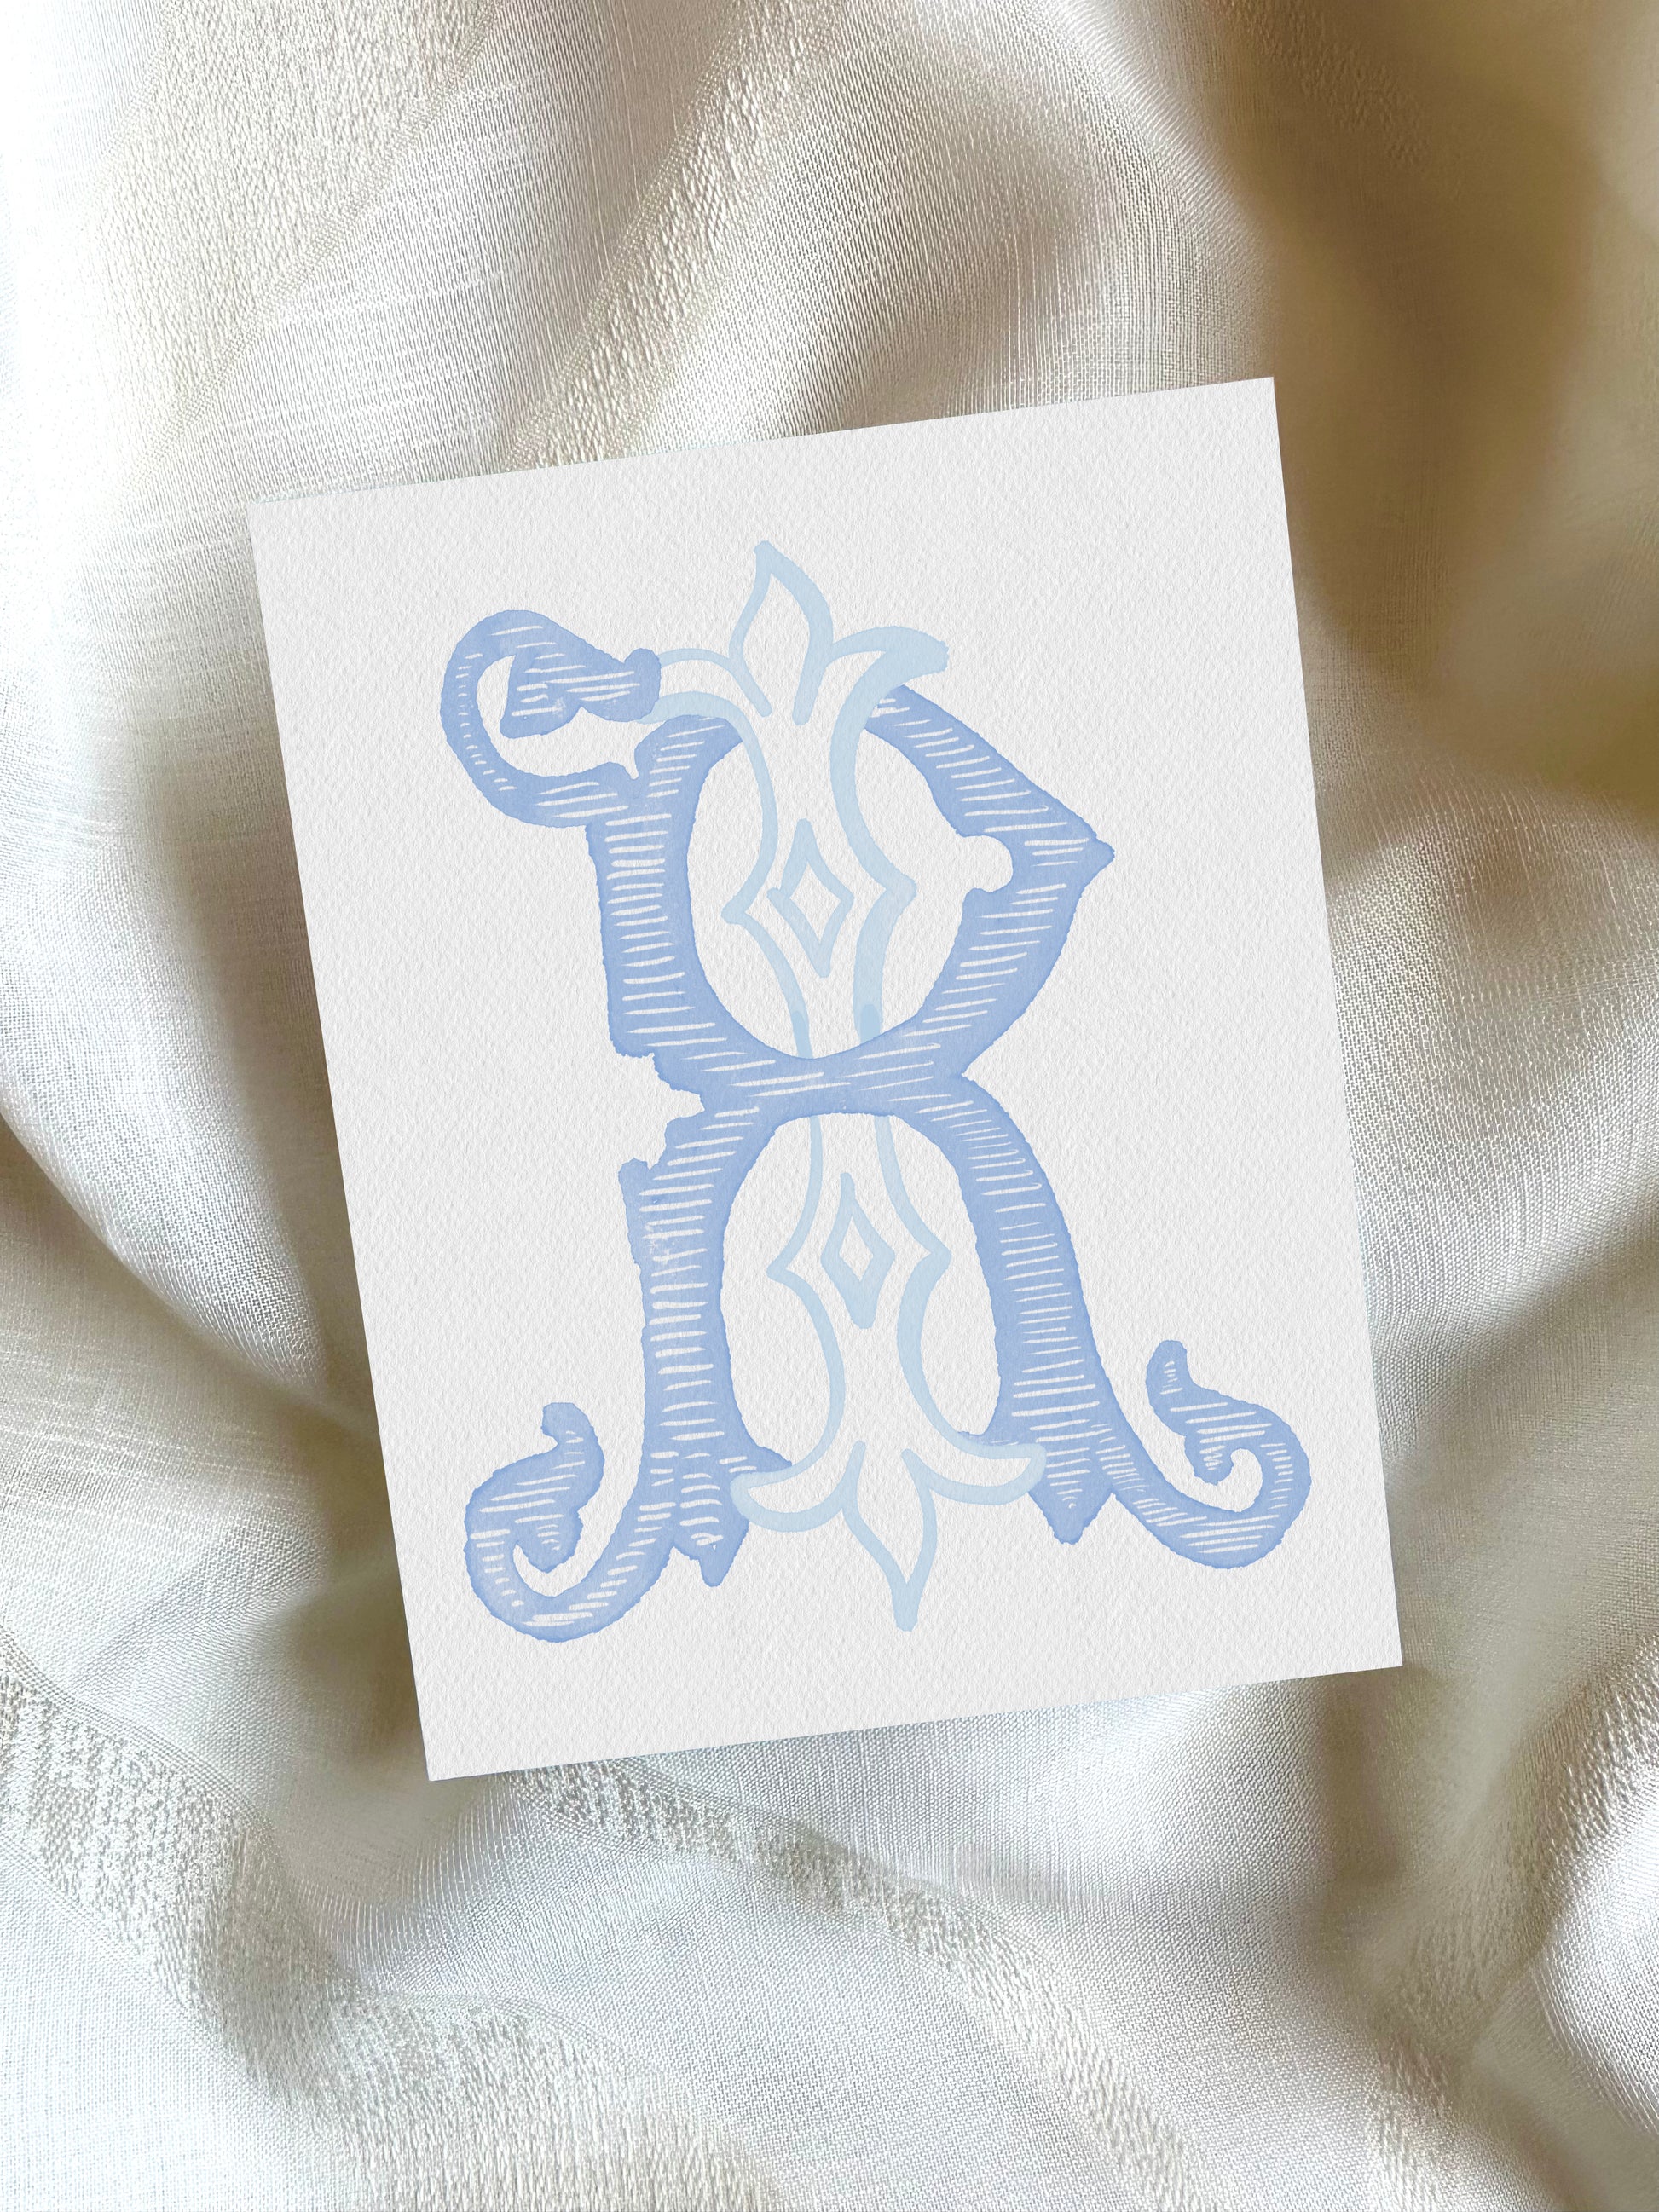 2 Letter Monogram with Letters IR RI | Digital Download - Wedding Monogram SVG, Personal Logo, Wedding Logo for Wedding Invitations The Wedding Crest Lab